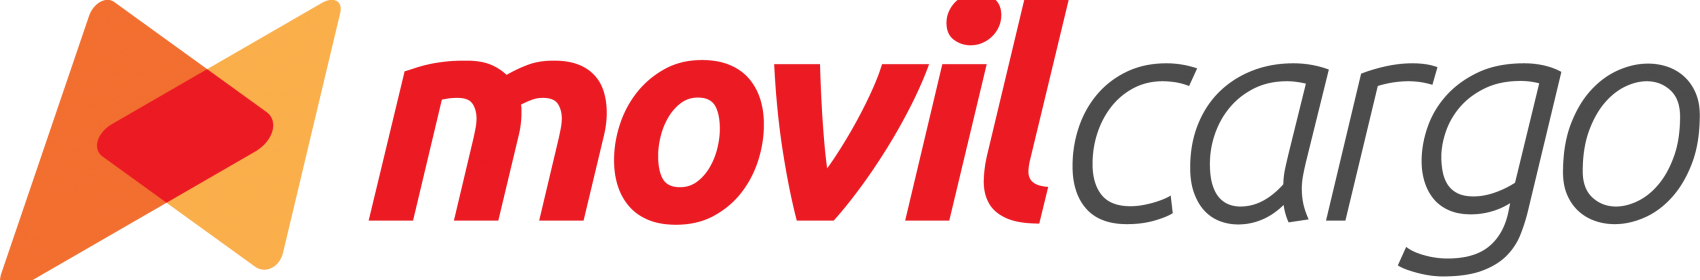 MovilCargo-logo0